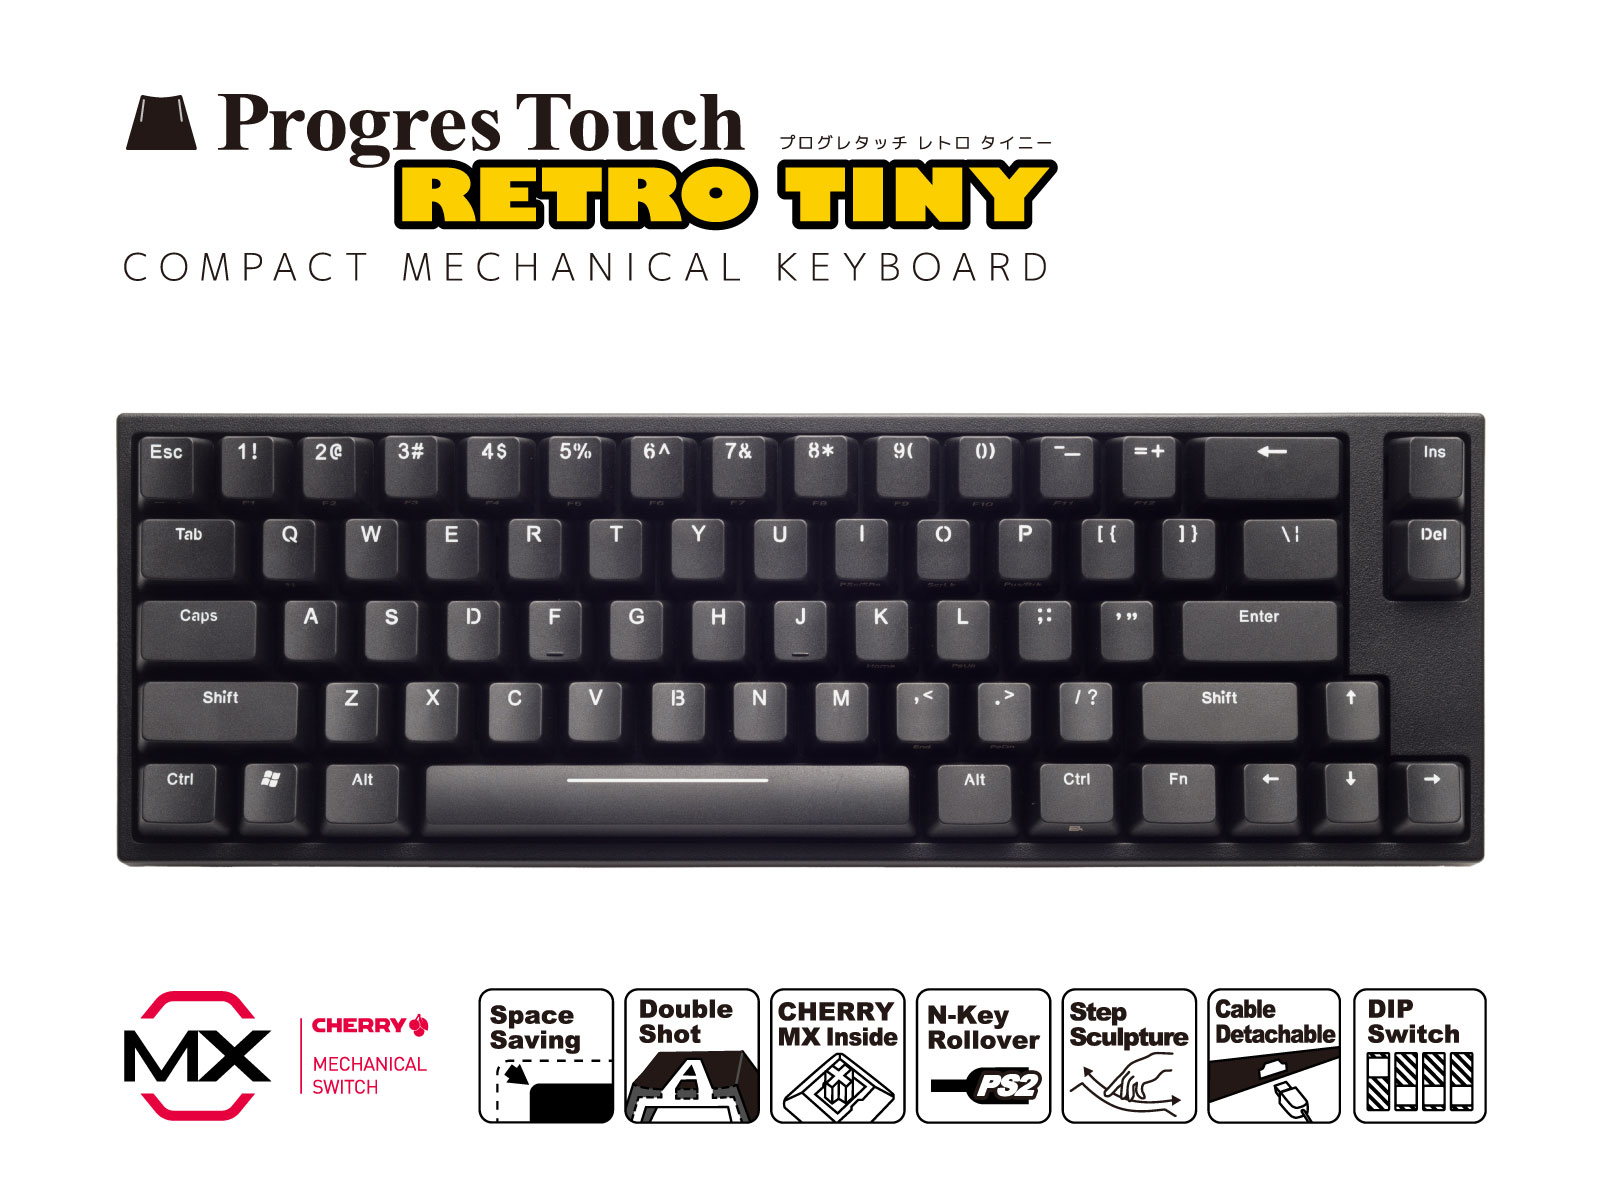 ARCHISS ProgresTouch RETRO TINY (タイニー) コンパクトメカニカルキーボード 英語ASCII配列 Cherry MX 静音赤軸（Silent Red/linear action）採用 AS-KBPD66/SRBK